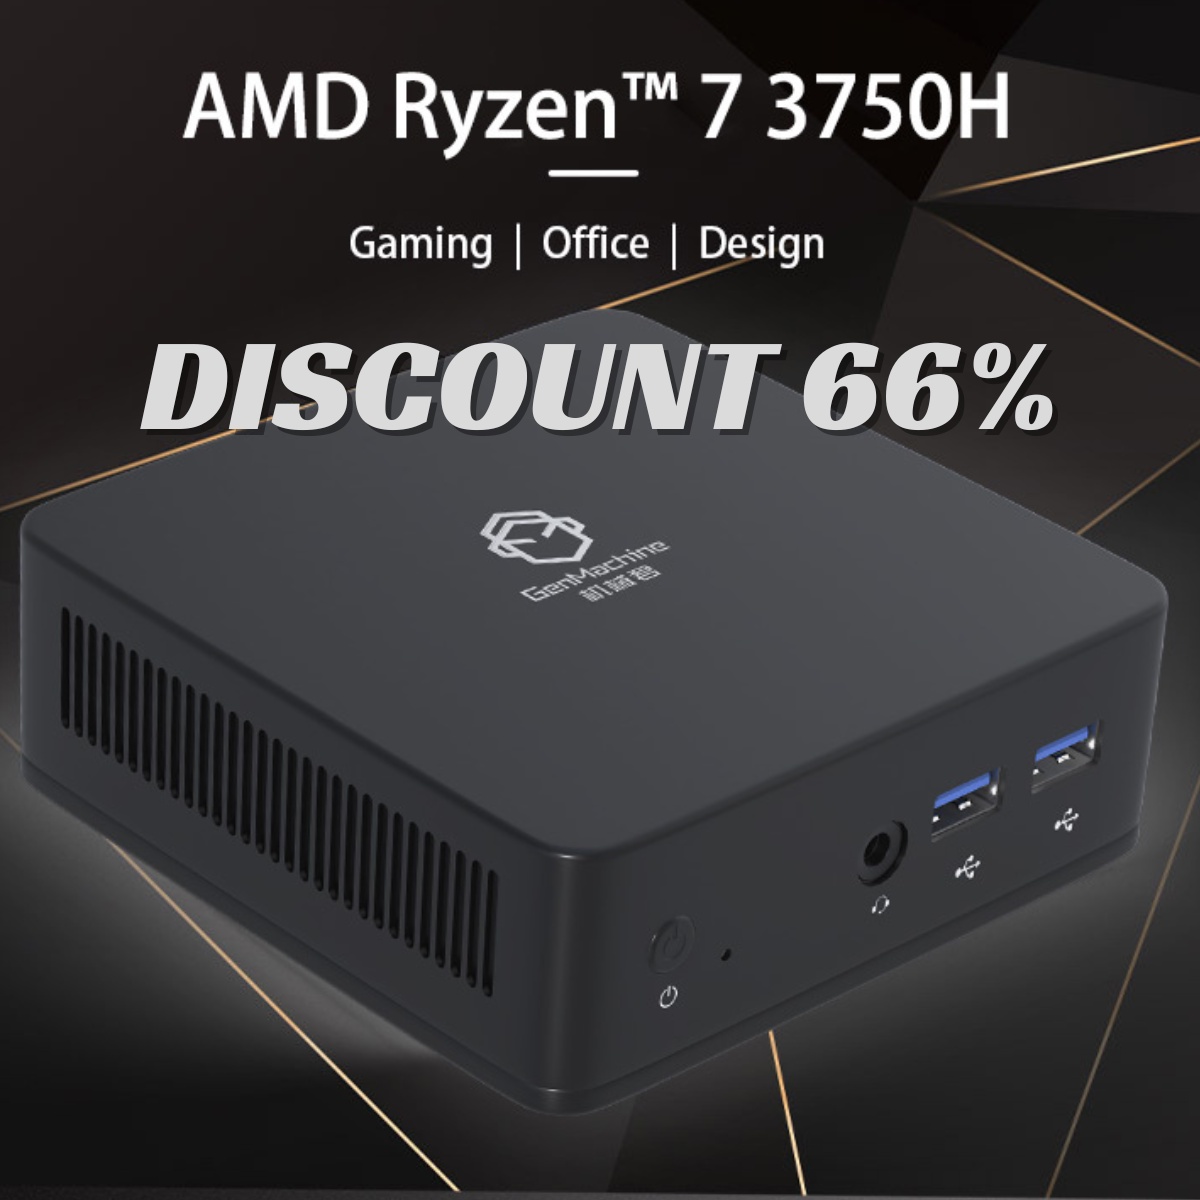 Unleashing Power and Versatility: GenMachine's New Mini PC with AMD Ryzen 7 3750H CPU